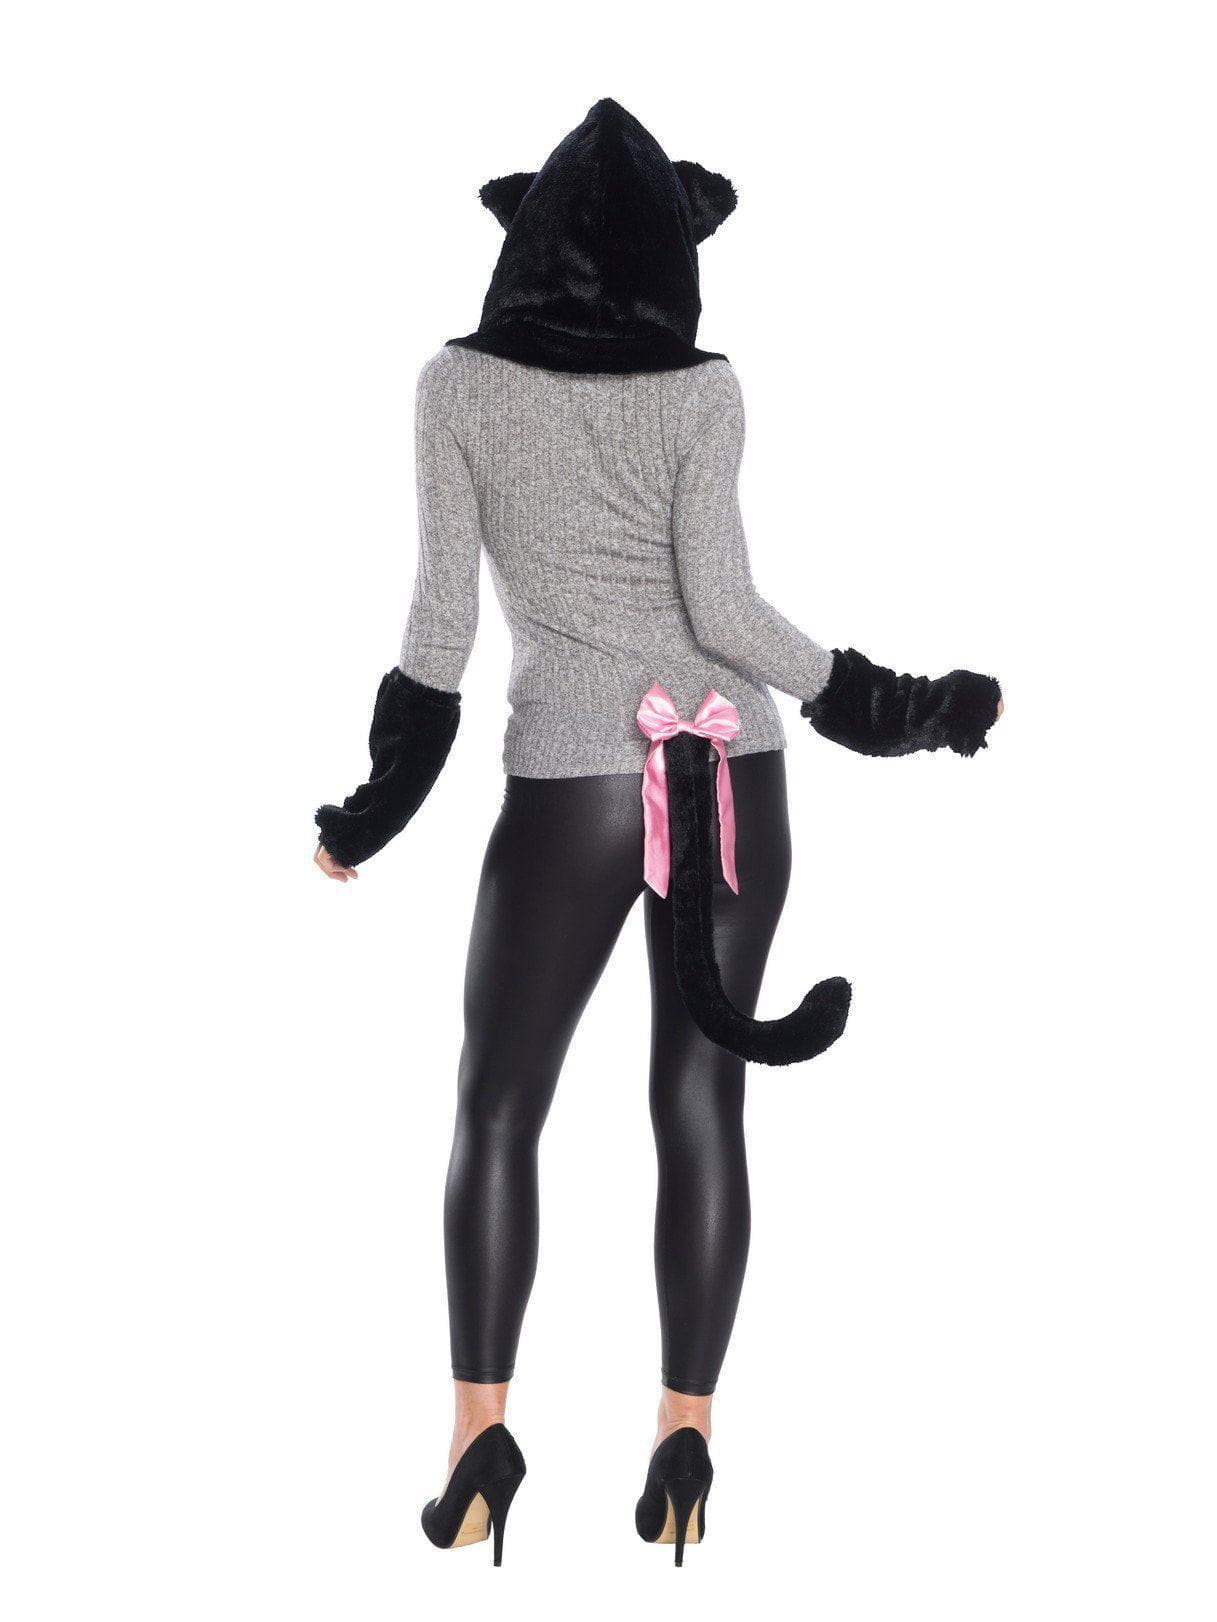 Adult Cat Hooded Kit Costume - costumes.com